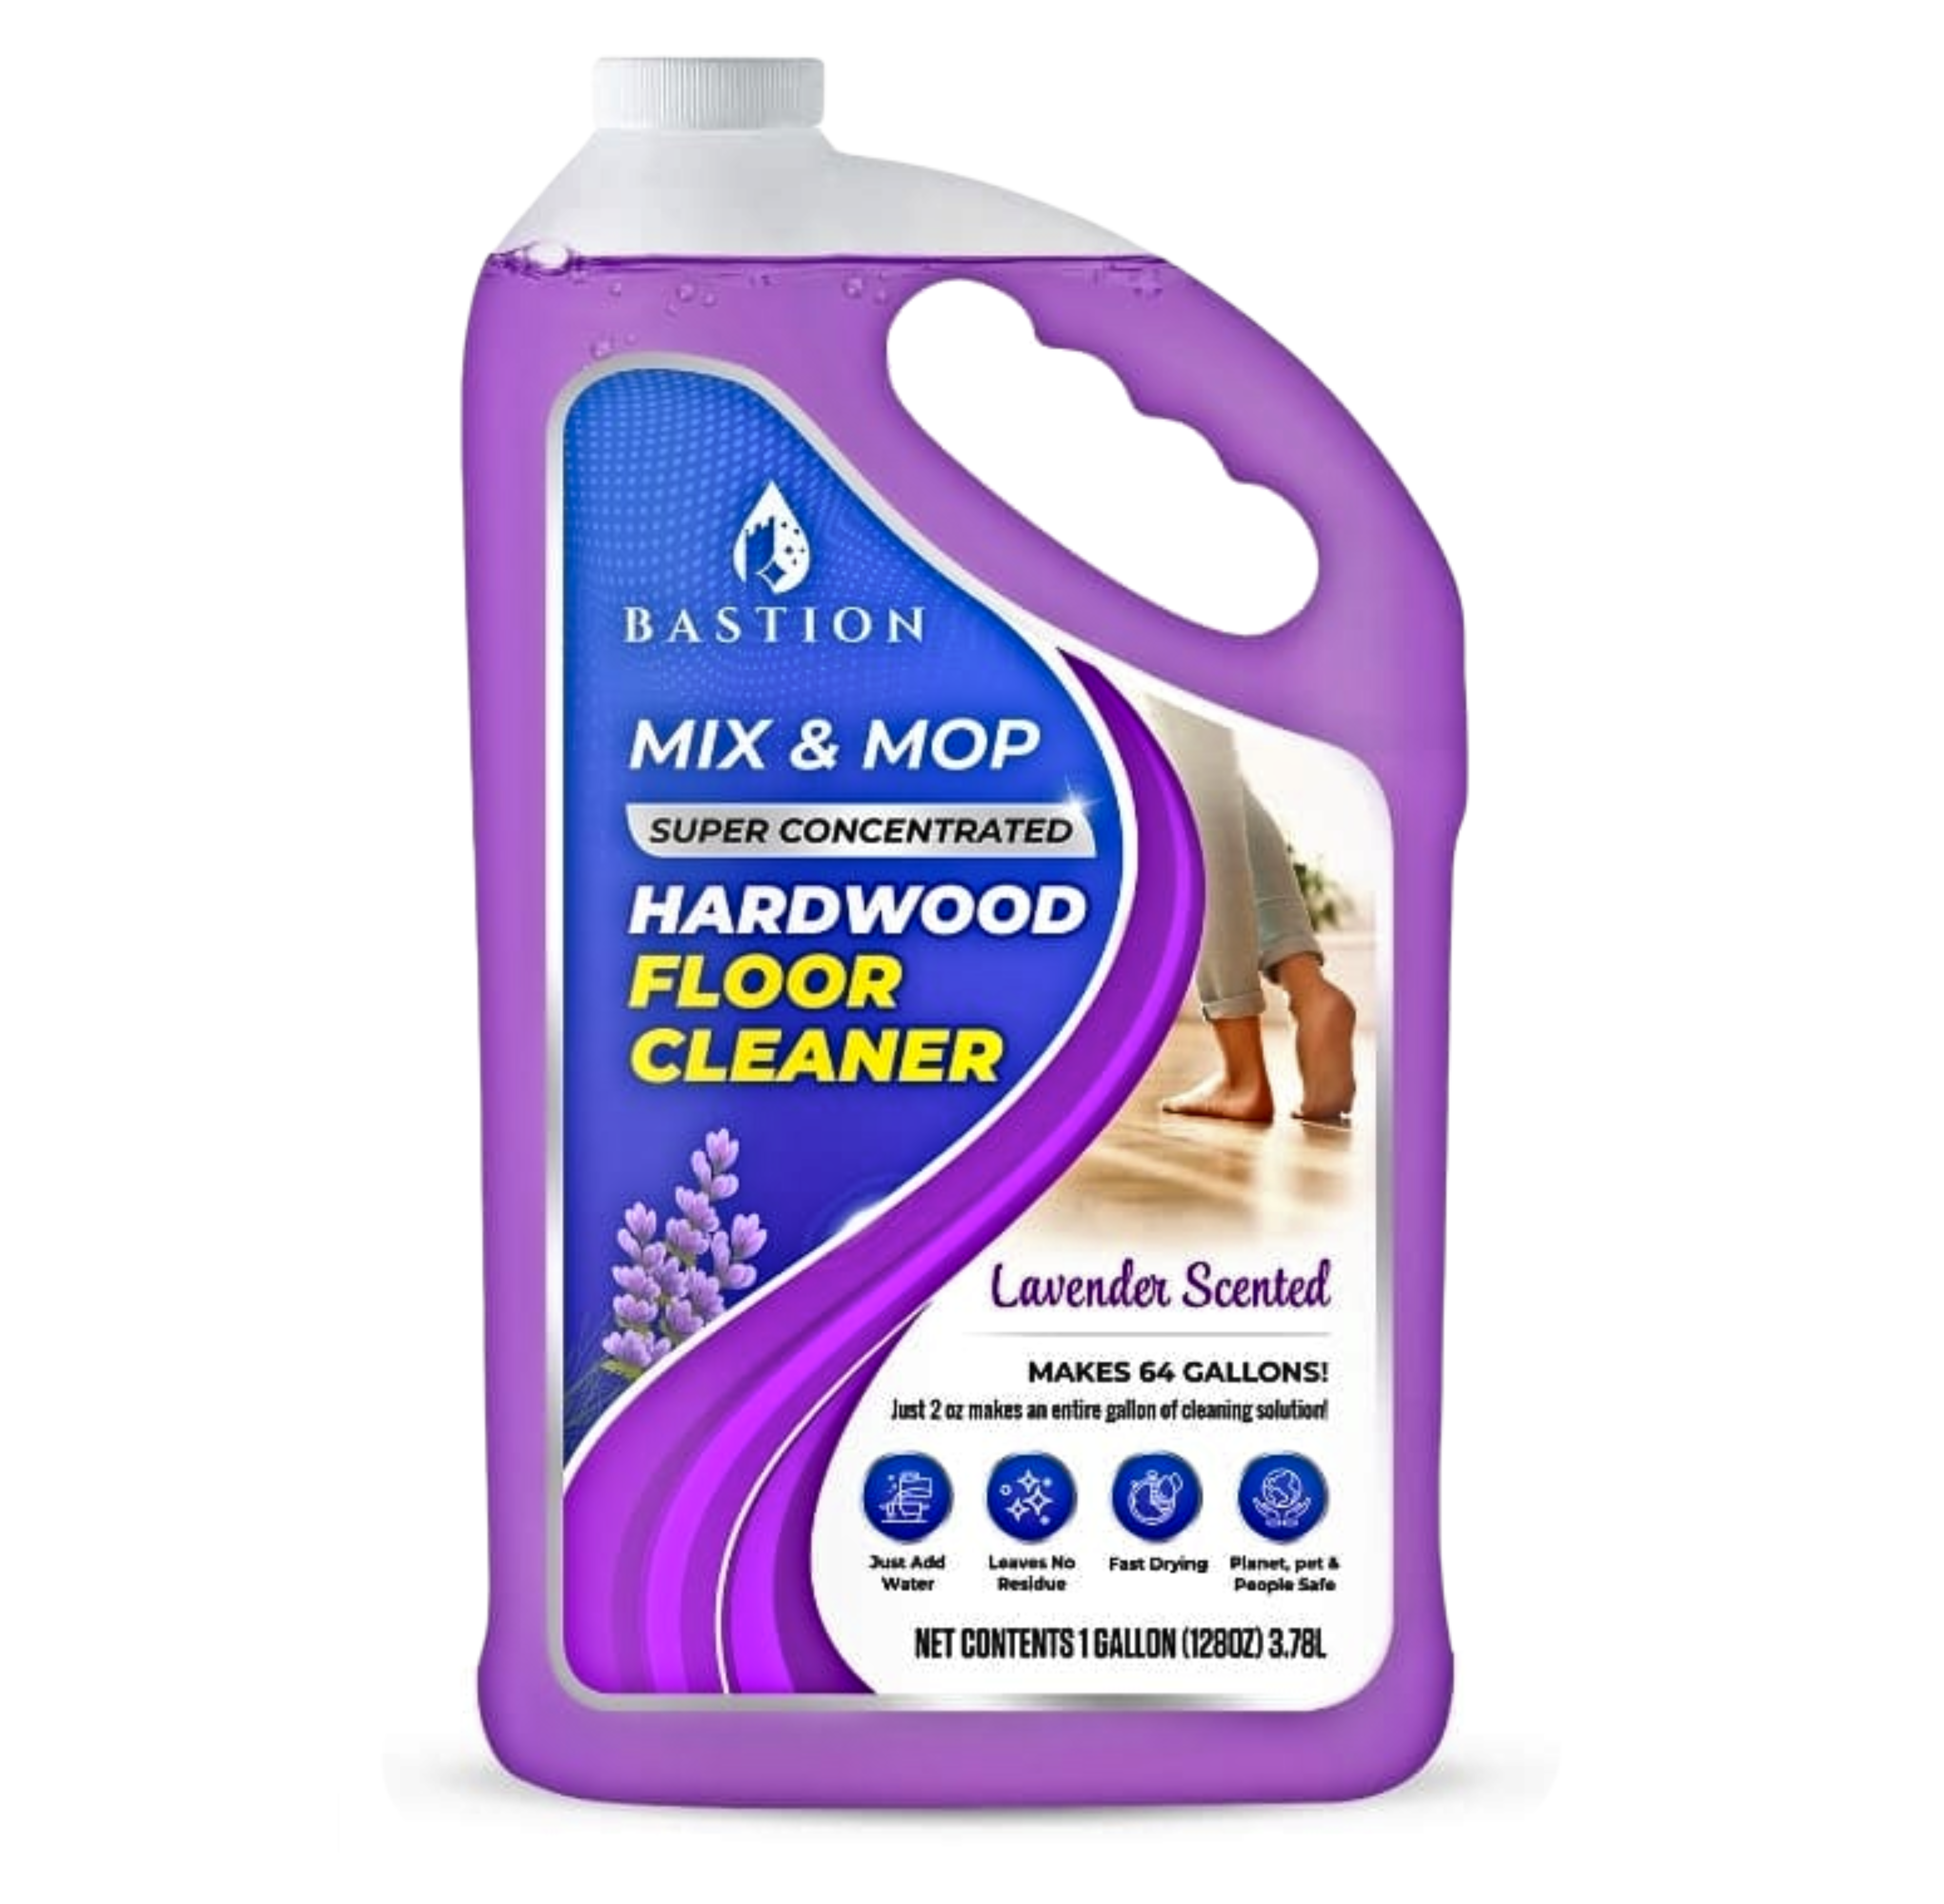 Multi-Purpose Cleaner & Deodorizer Pet Odor Eliminator, Multi-Surface Cleaner Concentrate for Floor, Carpet, Hardwood, Tile - Ocean Breeze Scent, PH